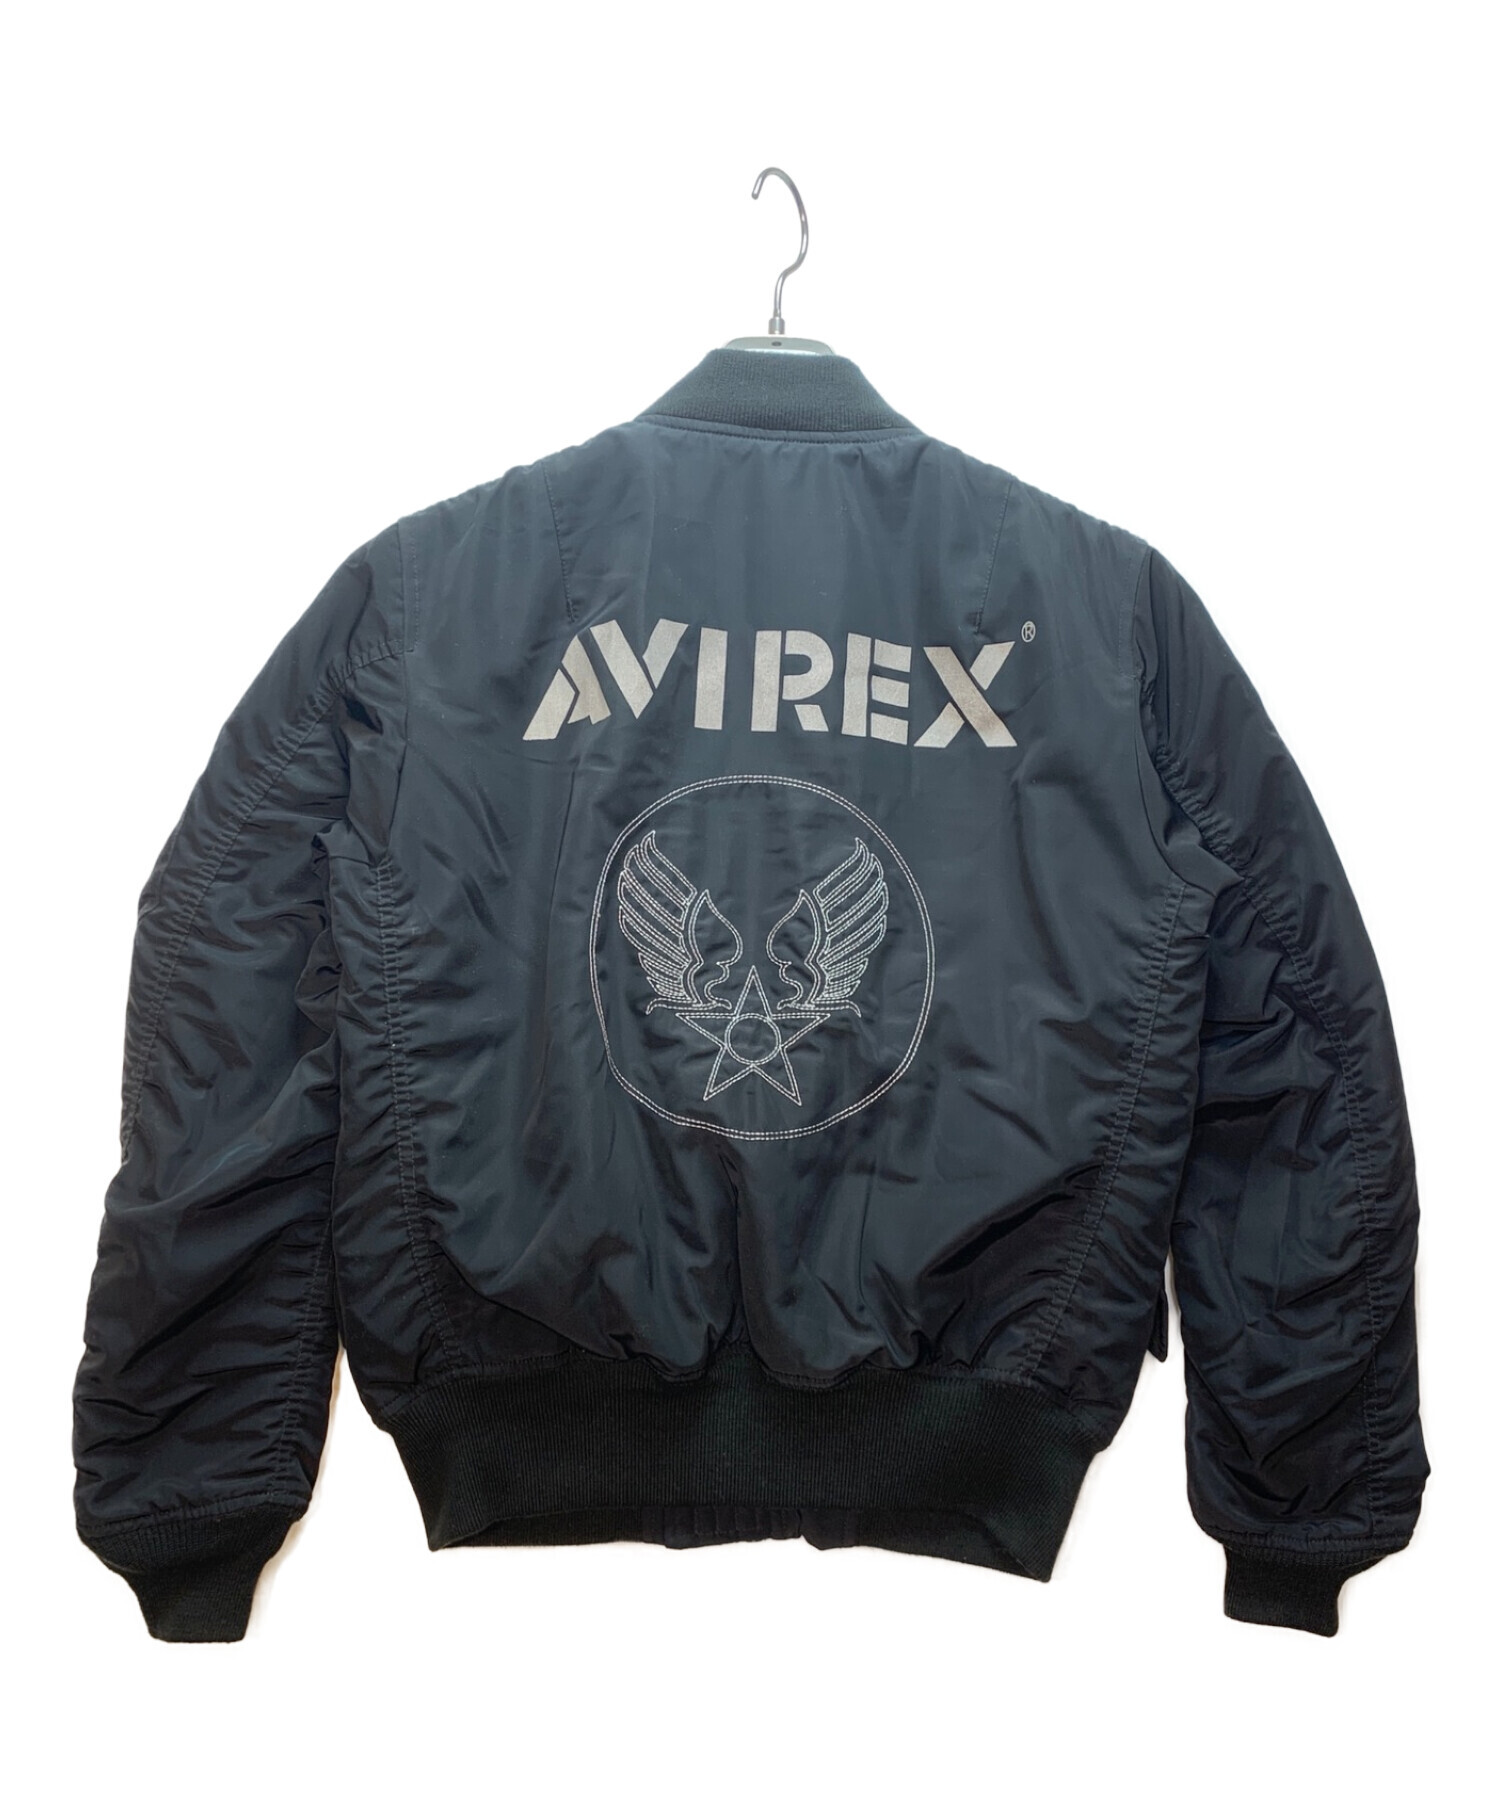 AVIREX (アヴィレックス) フライトジャケット ブラック サイズ:M